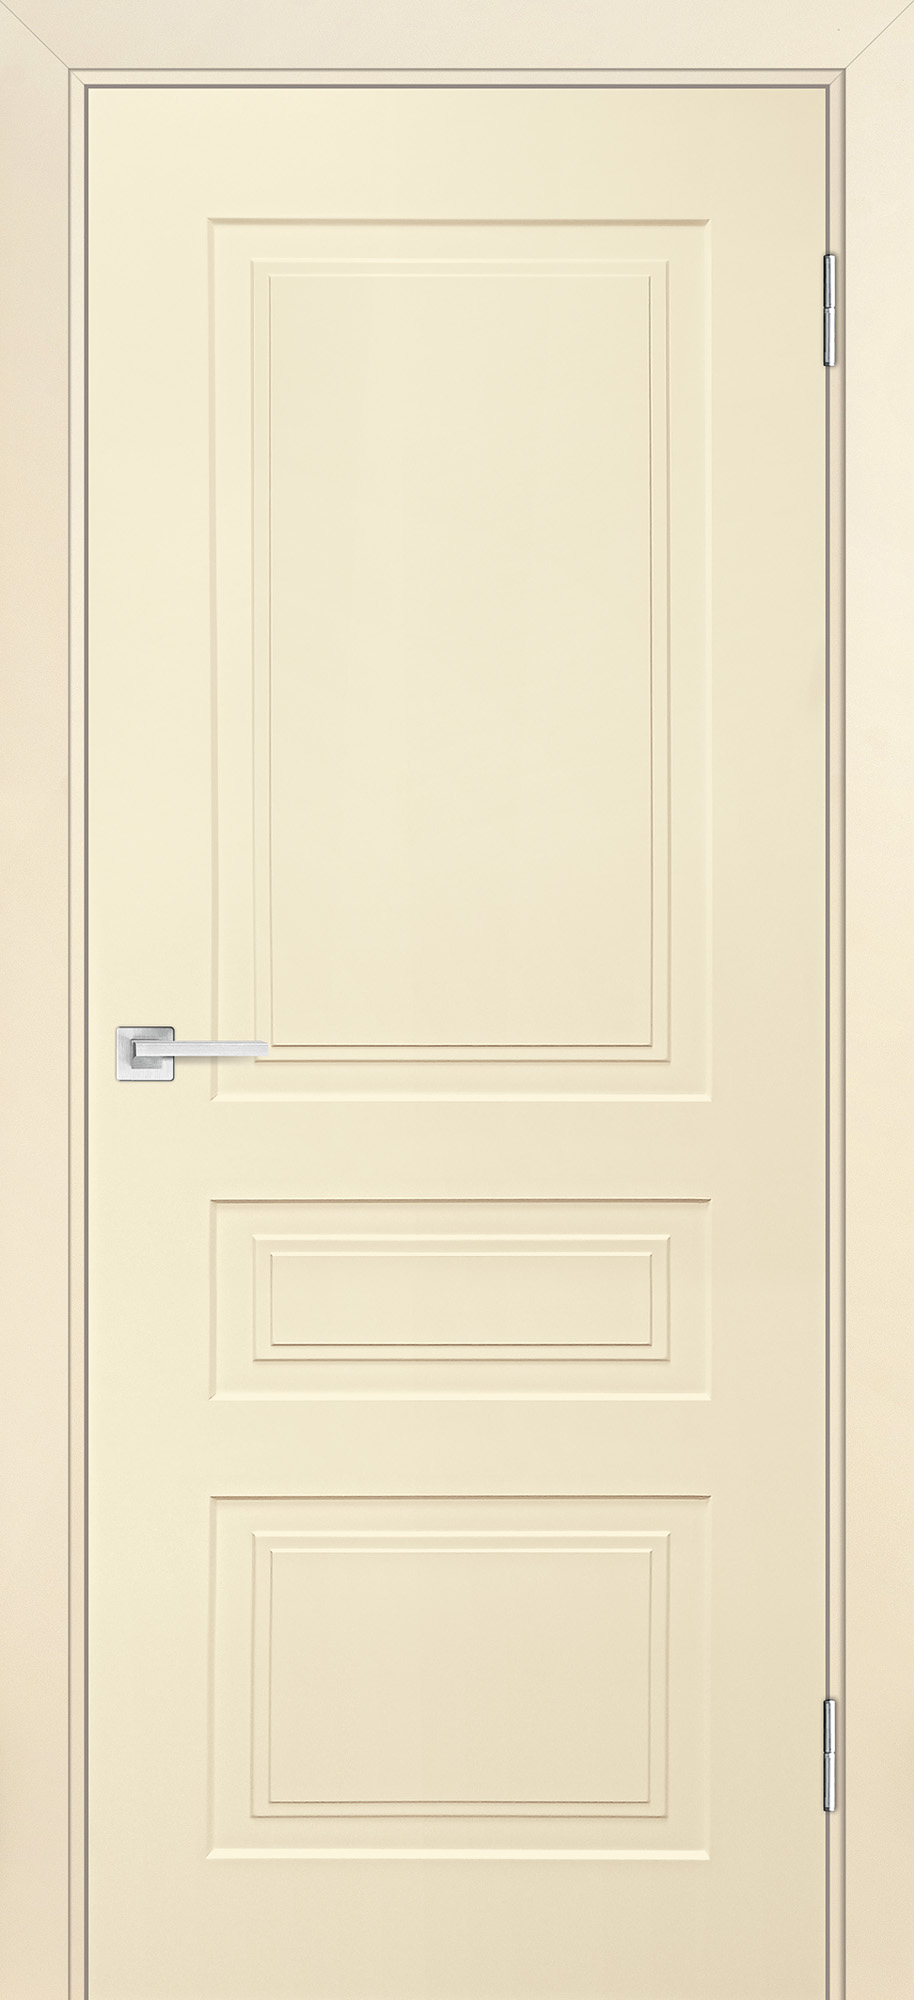 Двери крашеные (Эмаль) ТЕКОНА Смальта-Лайн 05 глухое Айвори ral 1013 размер 200 х 70 см. артикул F0000093250